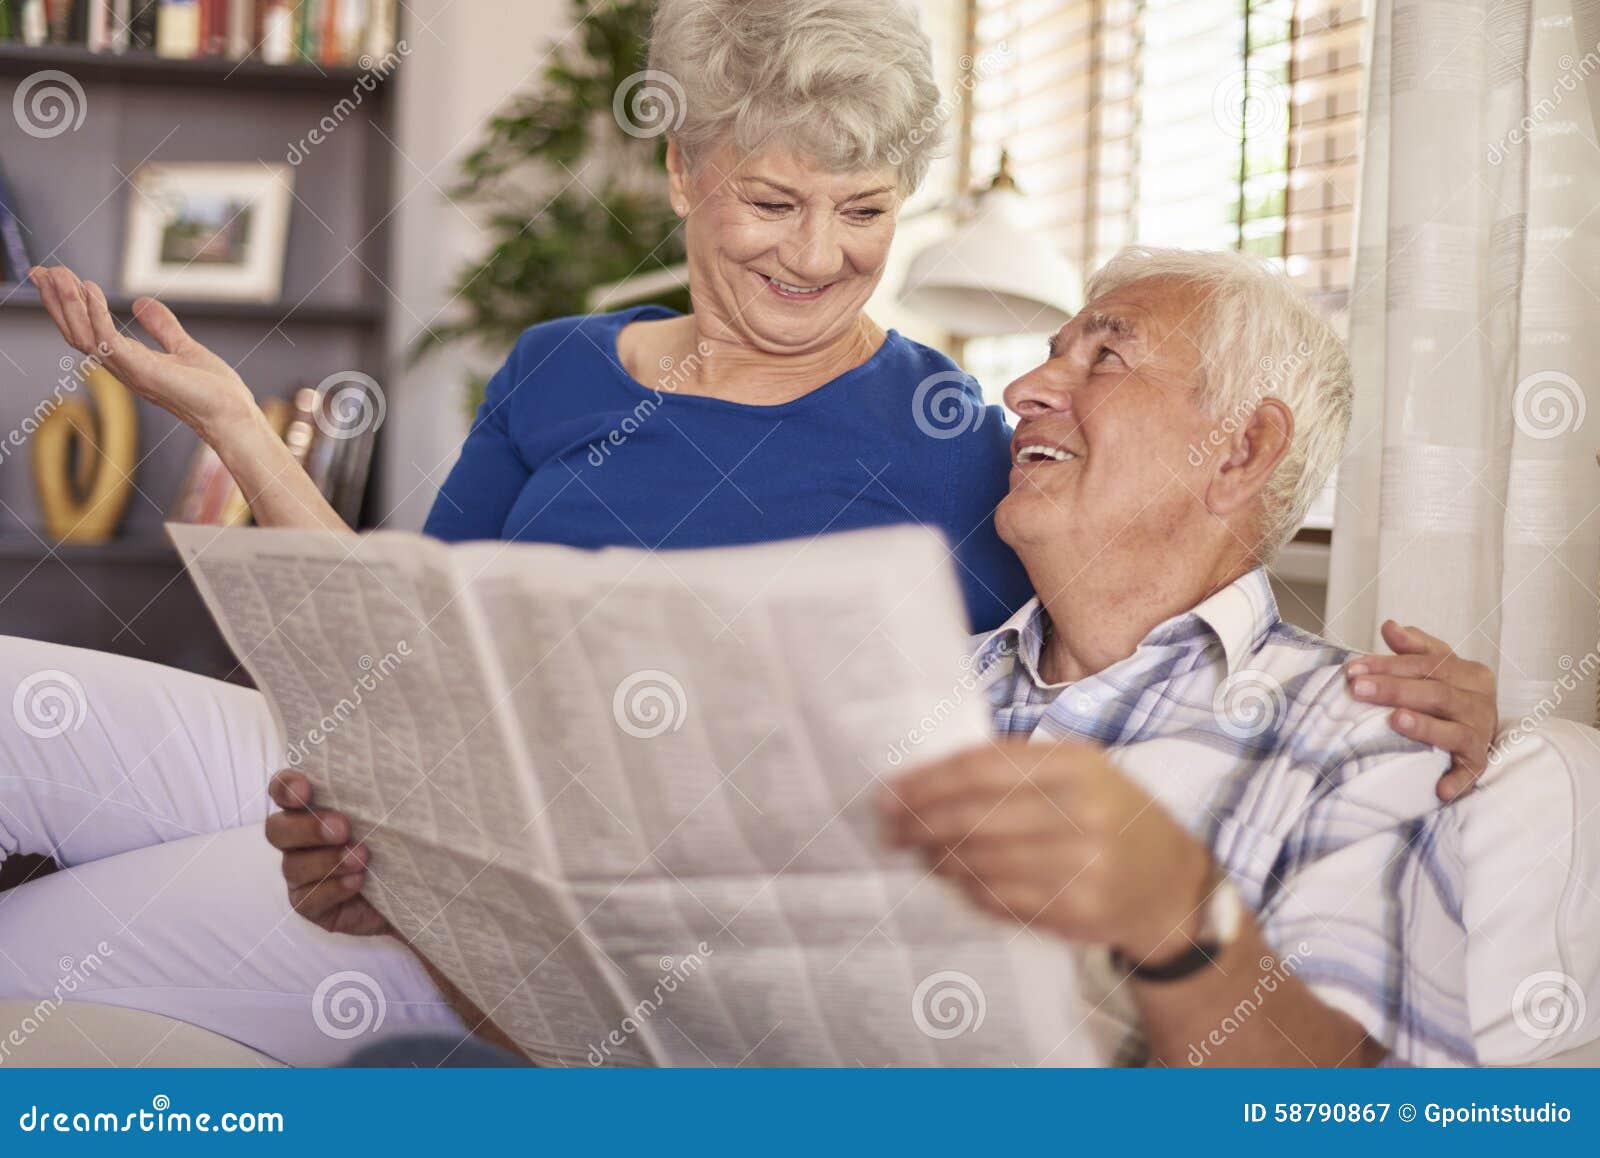 senior couple discussion about recent news